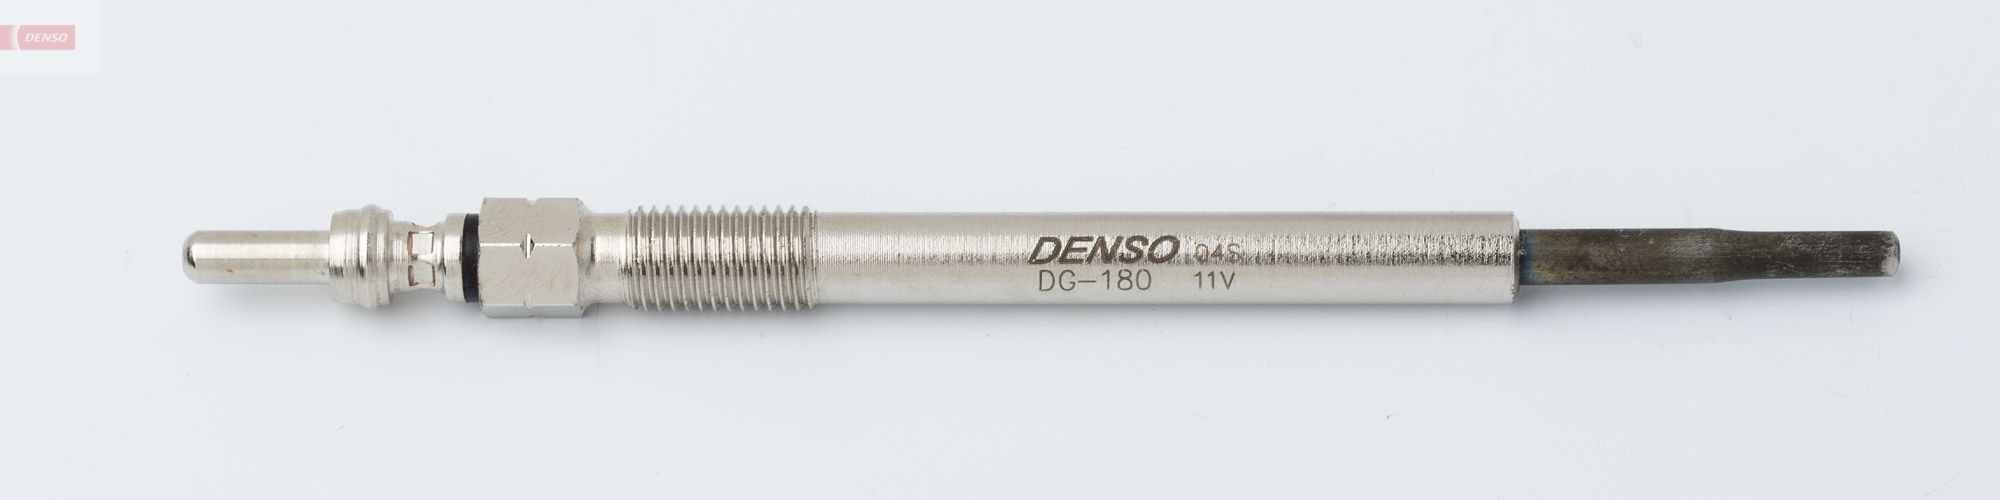 DENSO DG-180 Glow plugs Mazda 2 DY